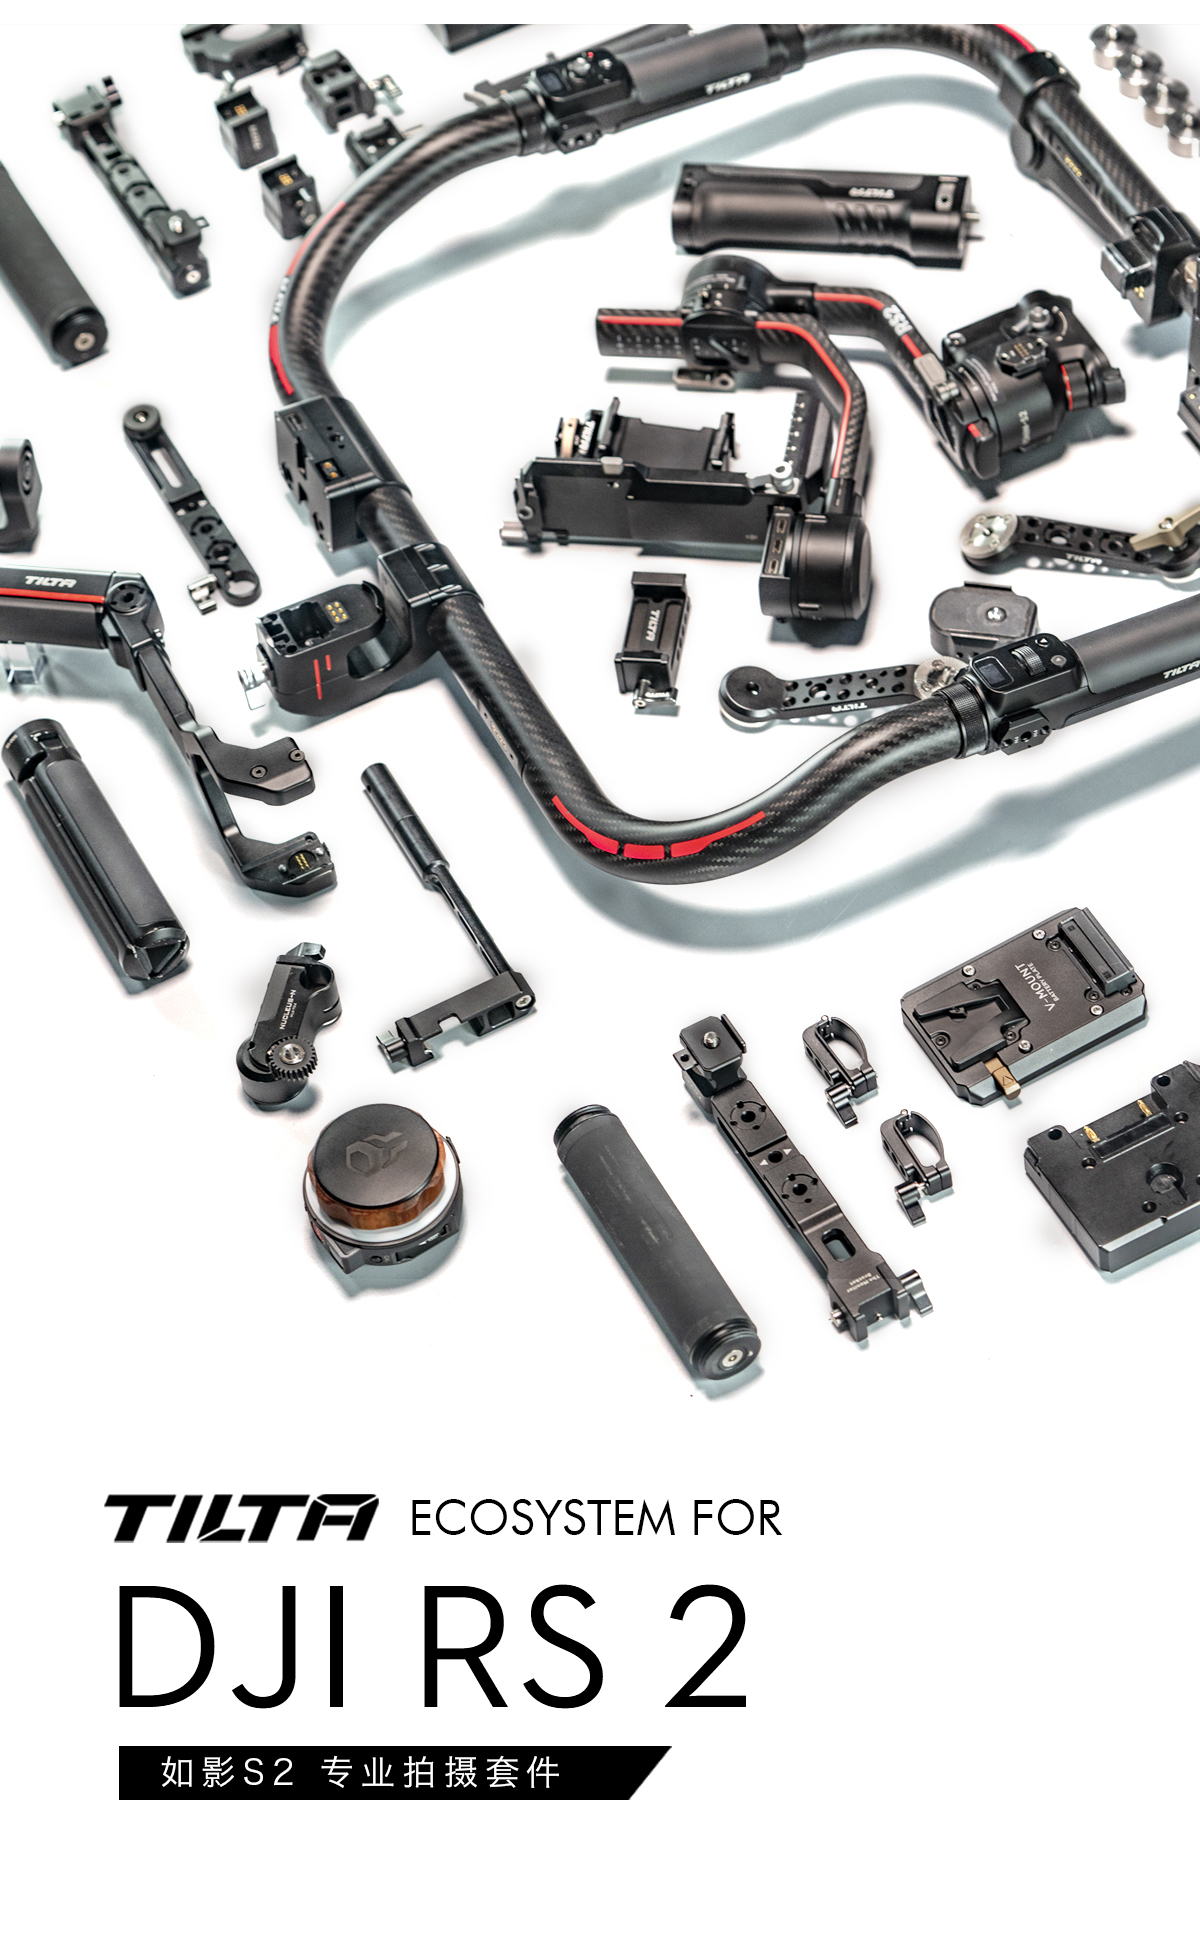 Tilta Ecosystem for DJI RS 2